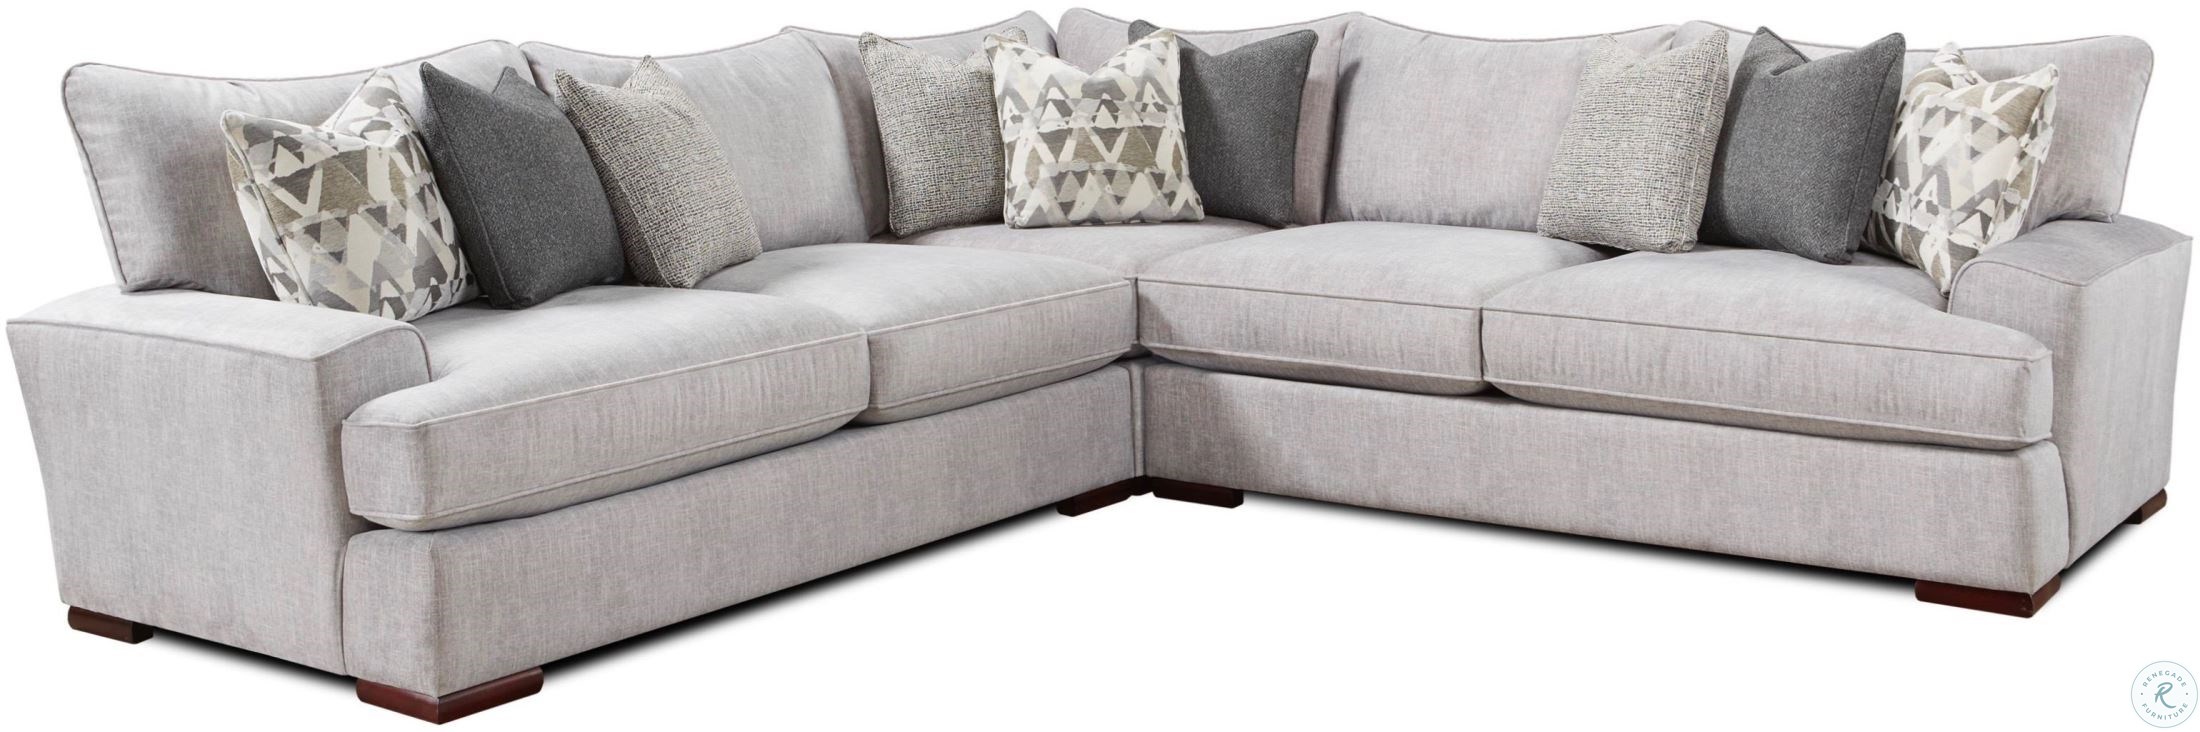 Stylish Alton Silver Sectional – Modern, Comfortable, Durable Sofa